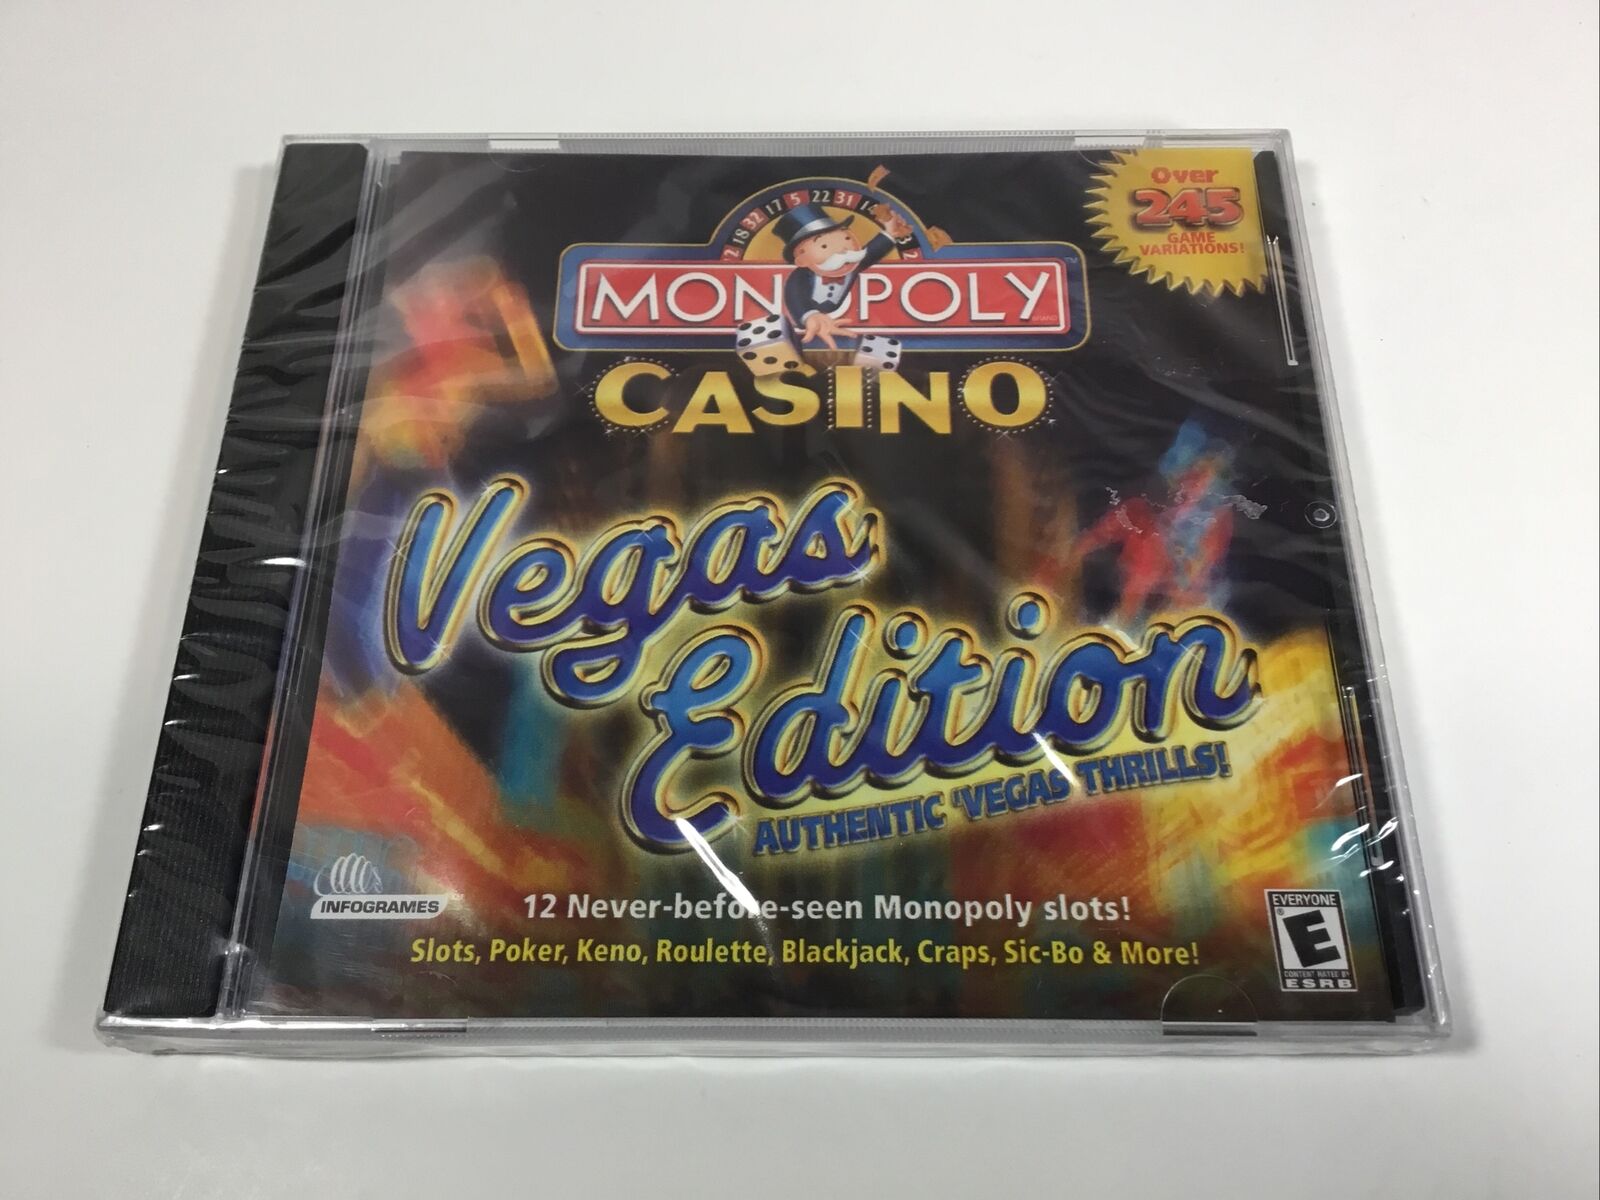 Monopoly Casino Vegas Edition Windows PC Game Infogrames 2001 Hasbro Williams